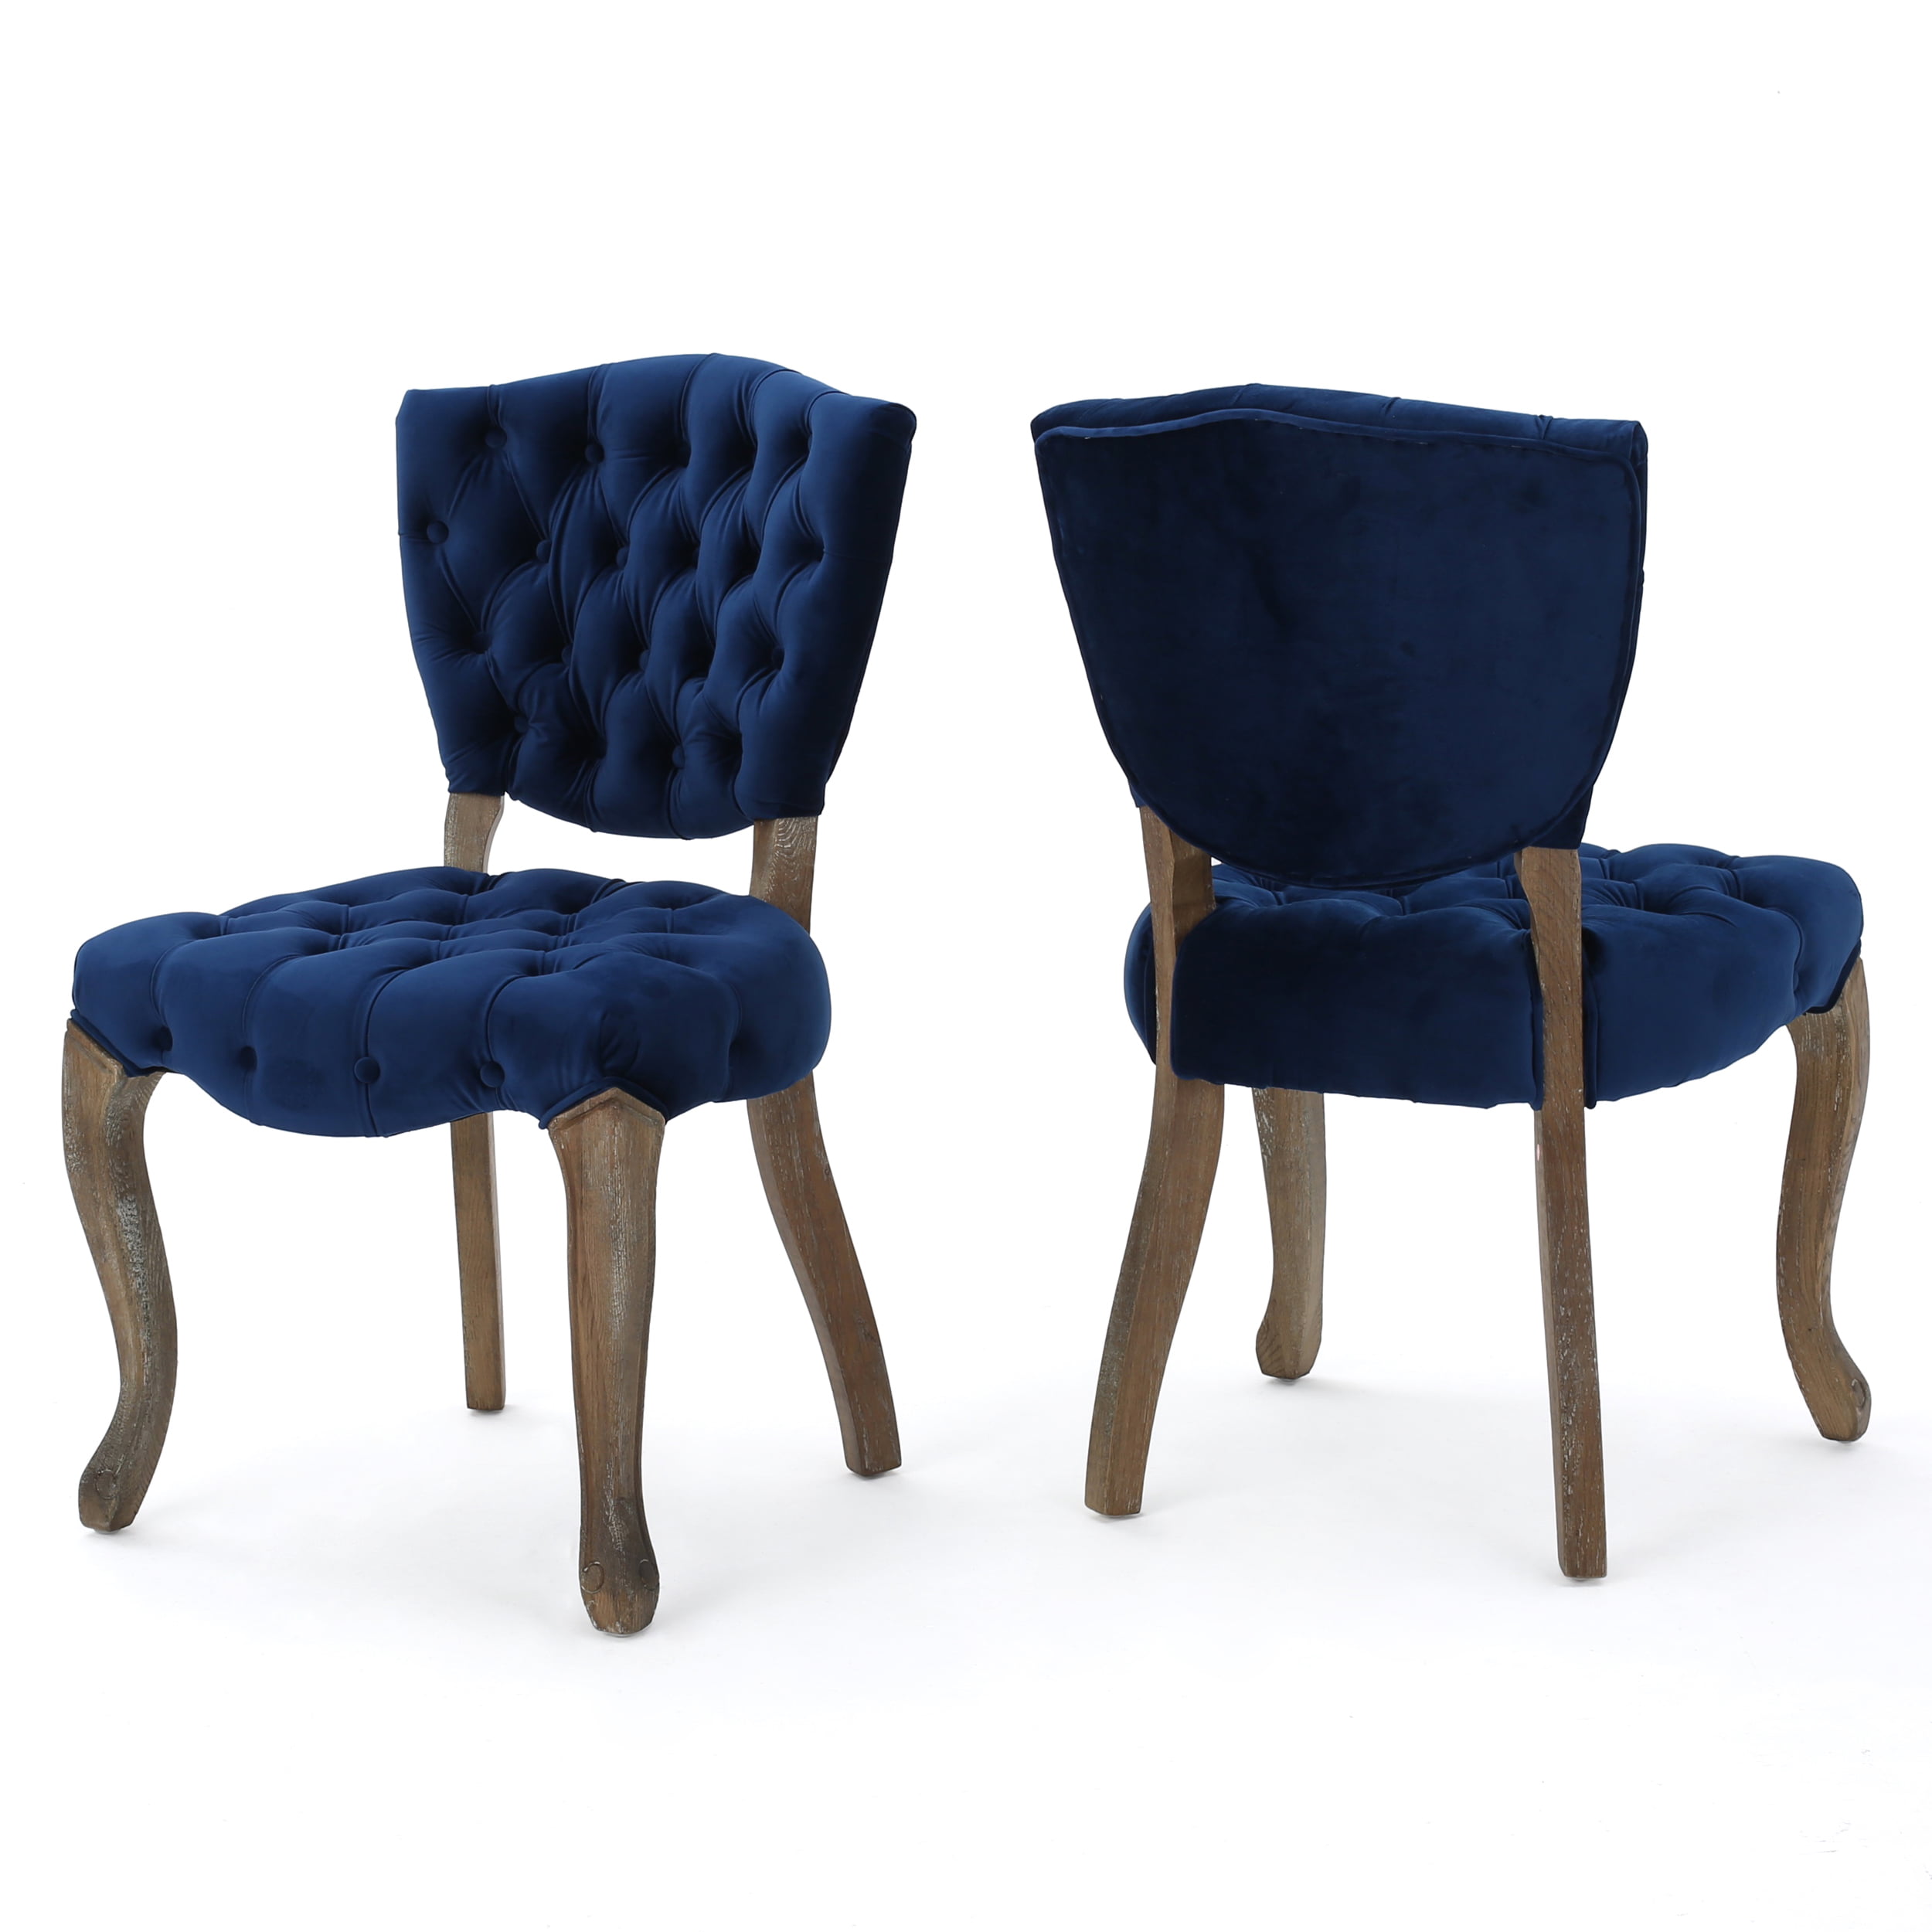 Duke Tufted New Velvet Dining Chairs, Navy Blue Tufted Dining Chair